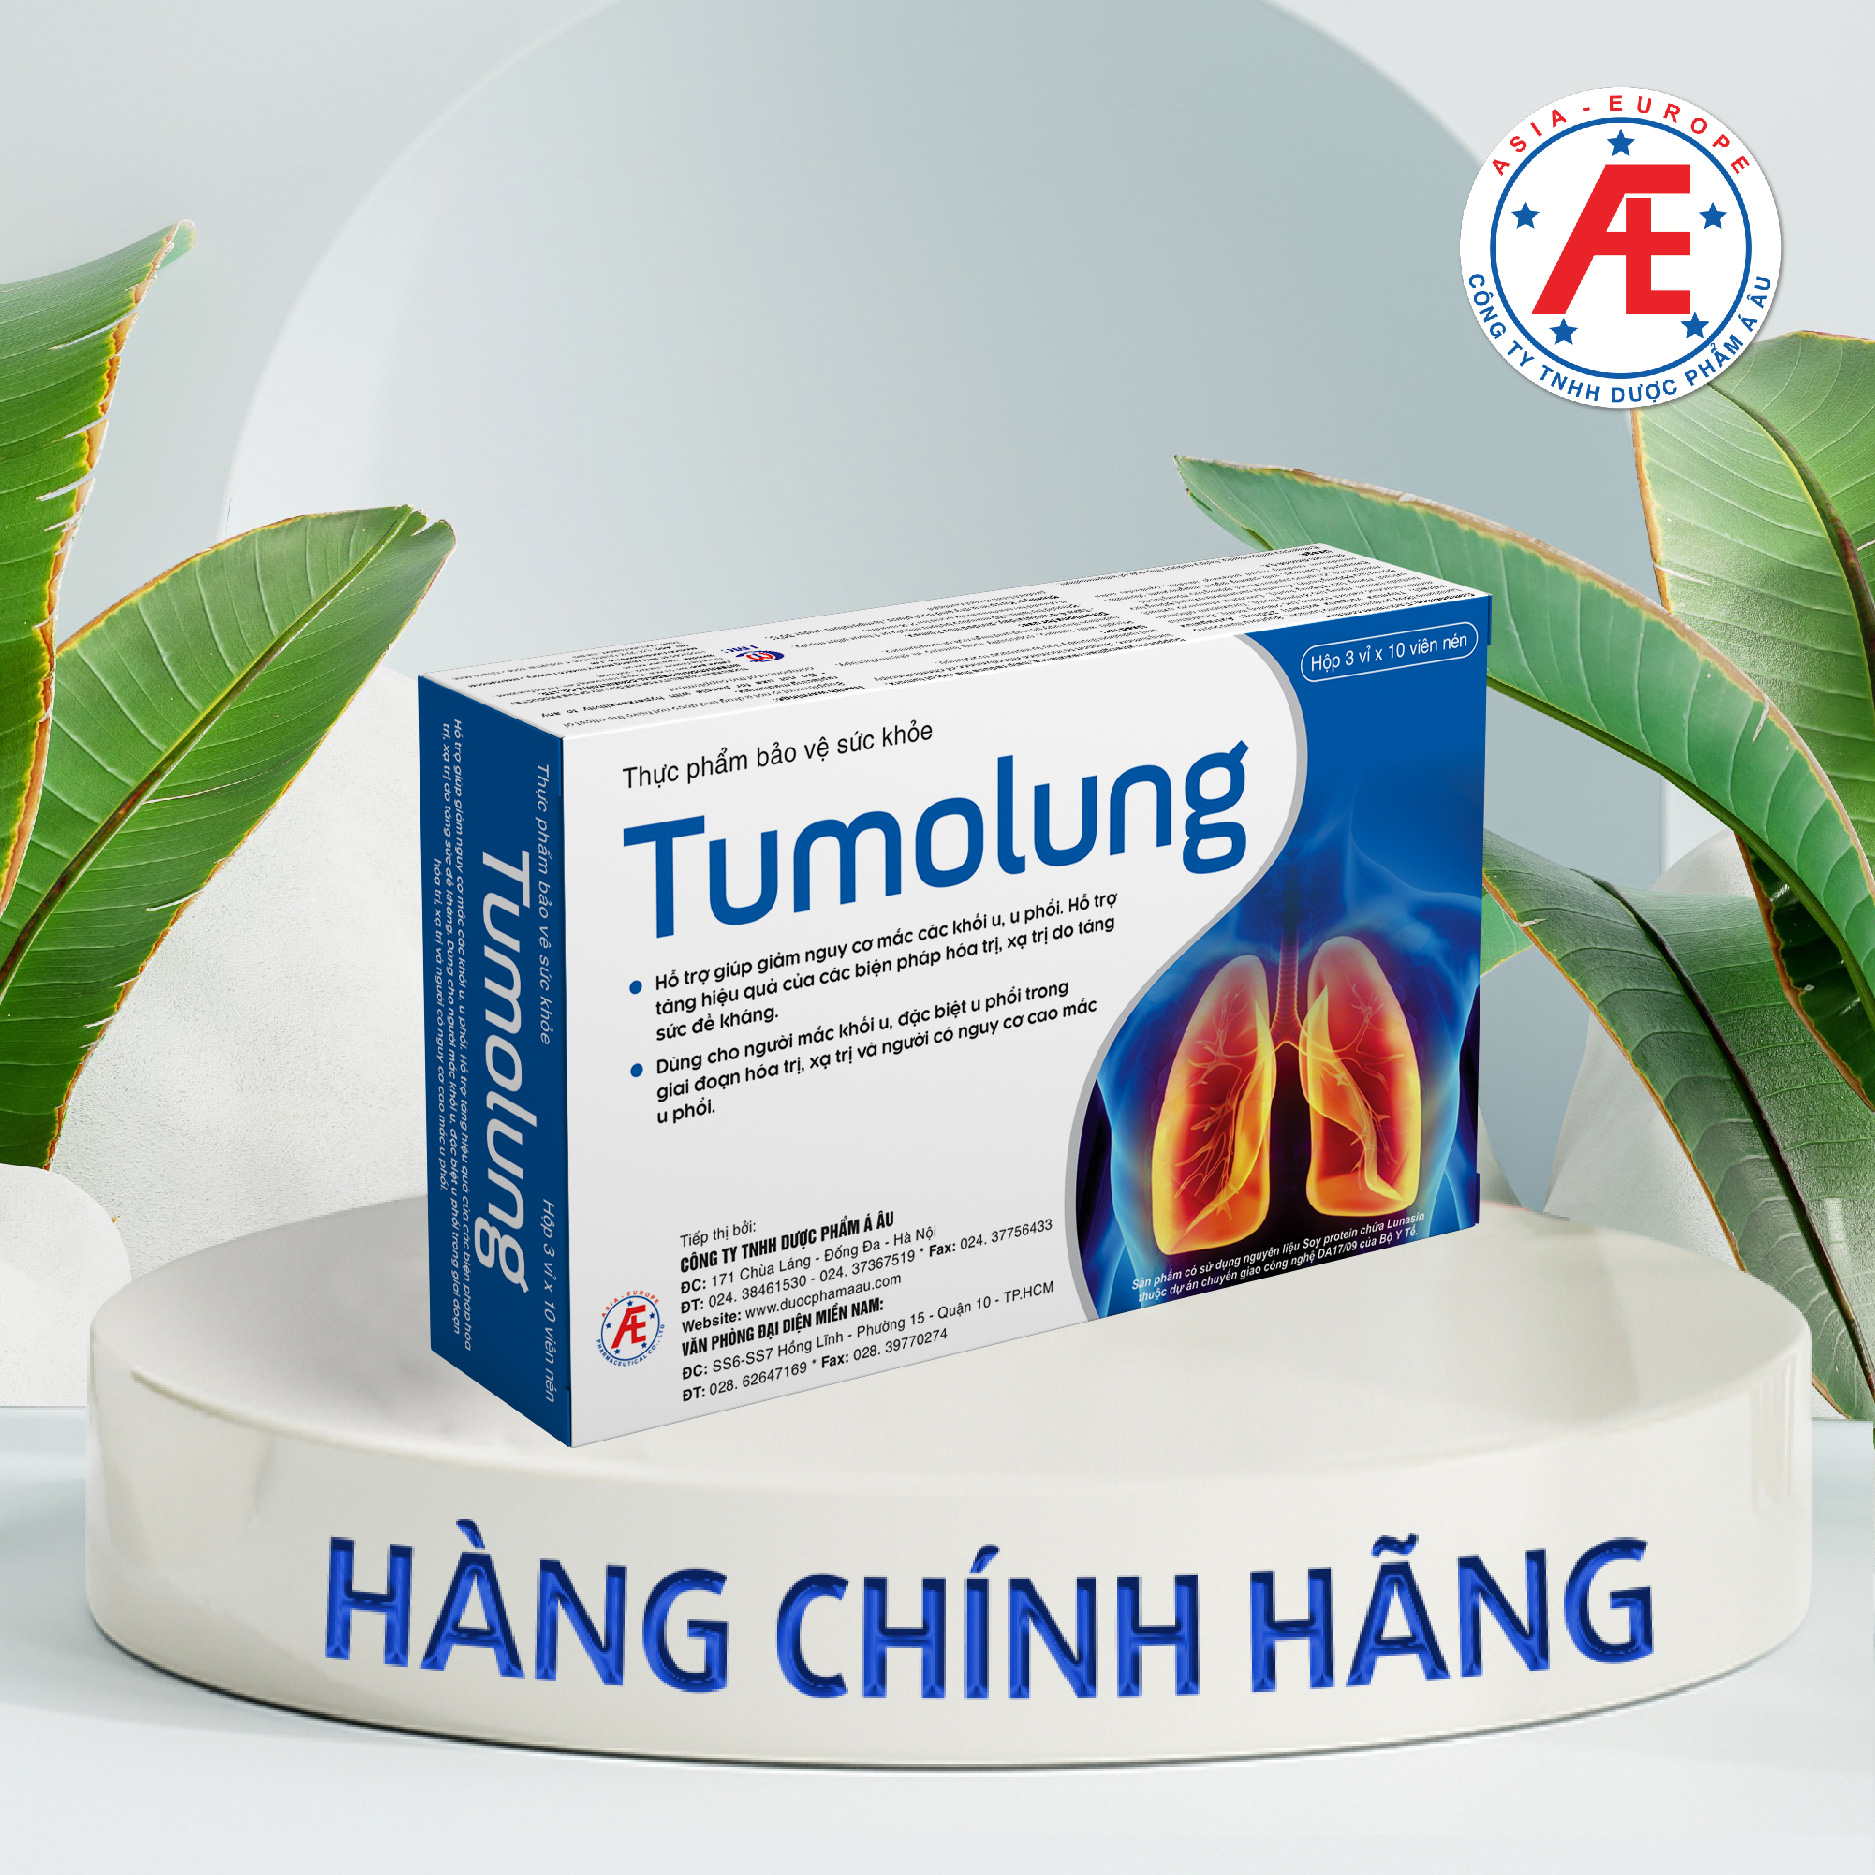 Tumolung - Tốt cho phổi